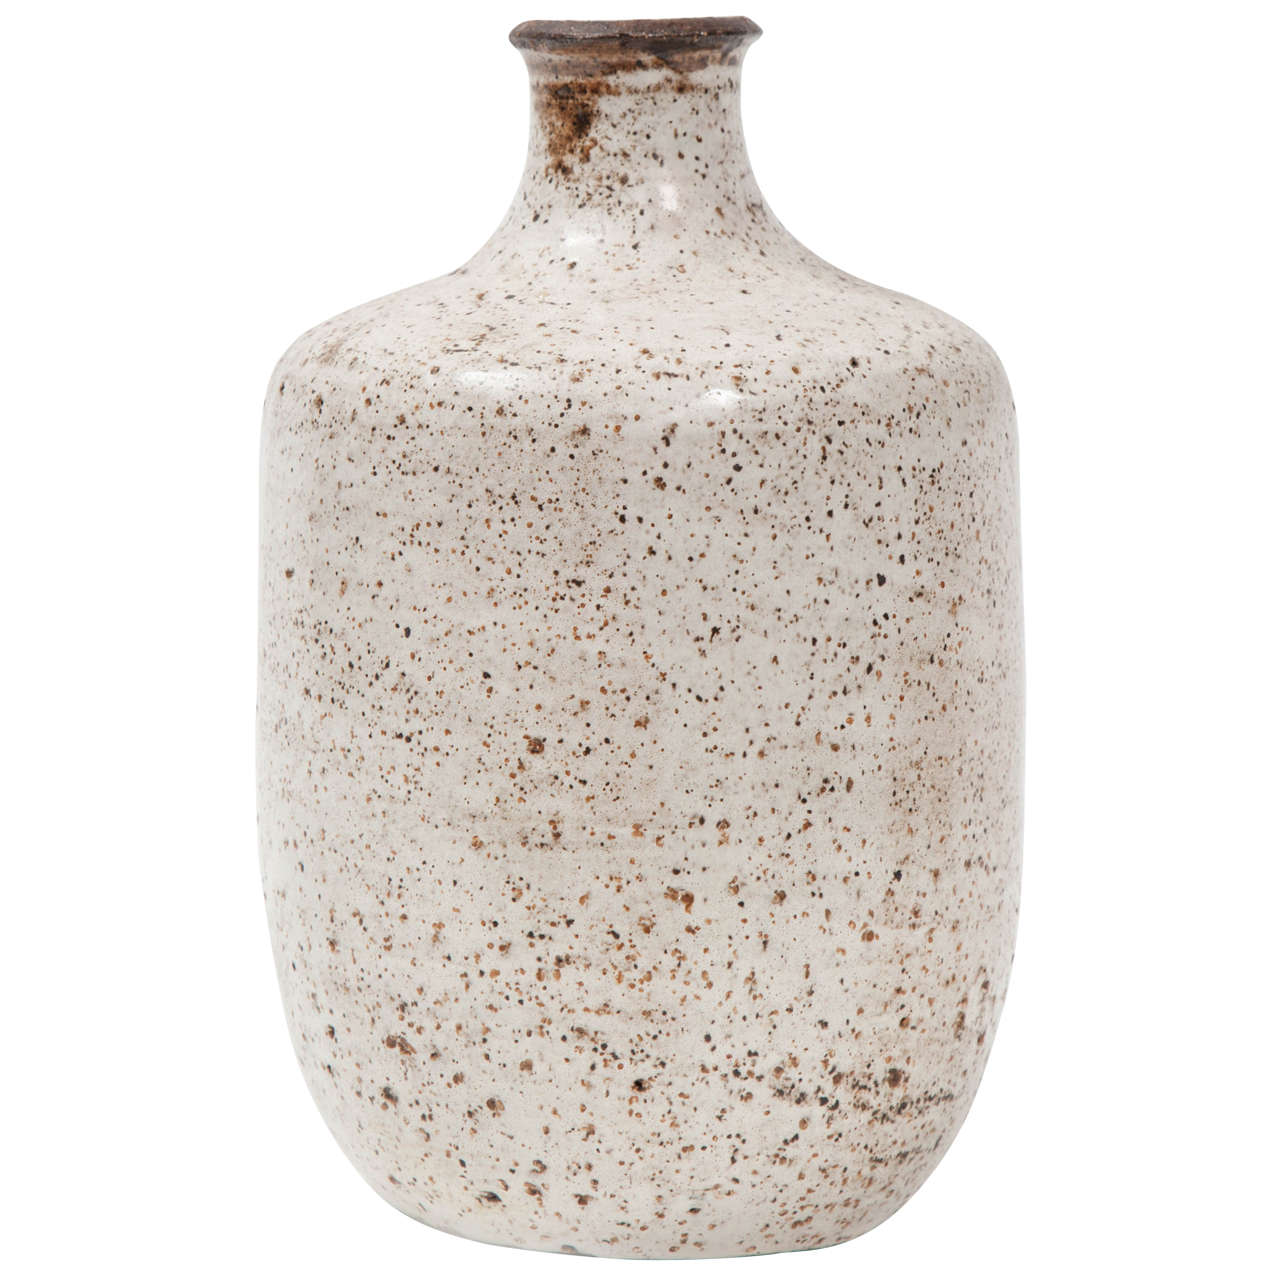 Frans Wildenhain Ceramic Bottle Vase, Stoneware with White Glaze, circa 1950s